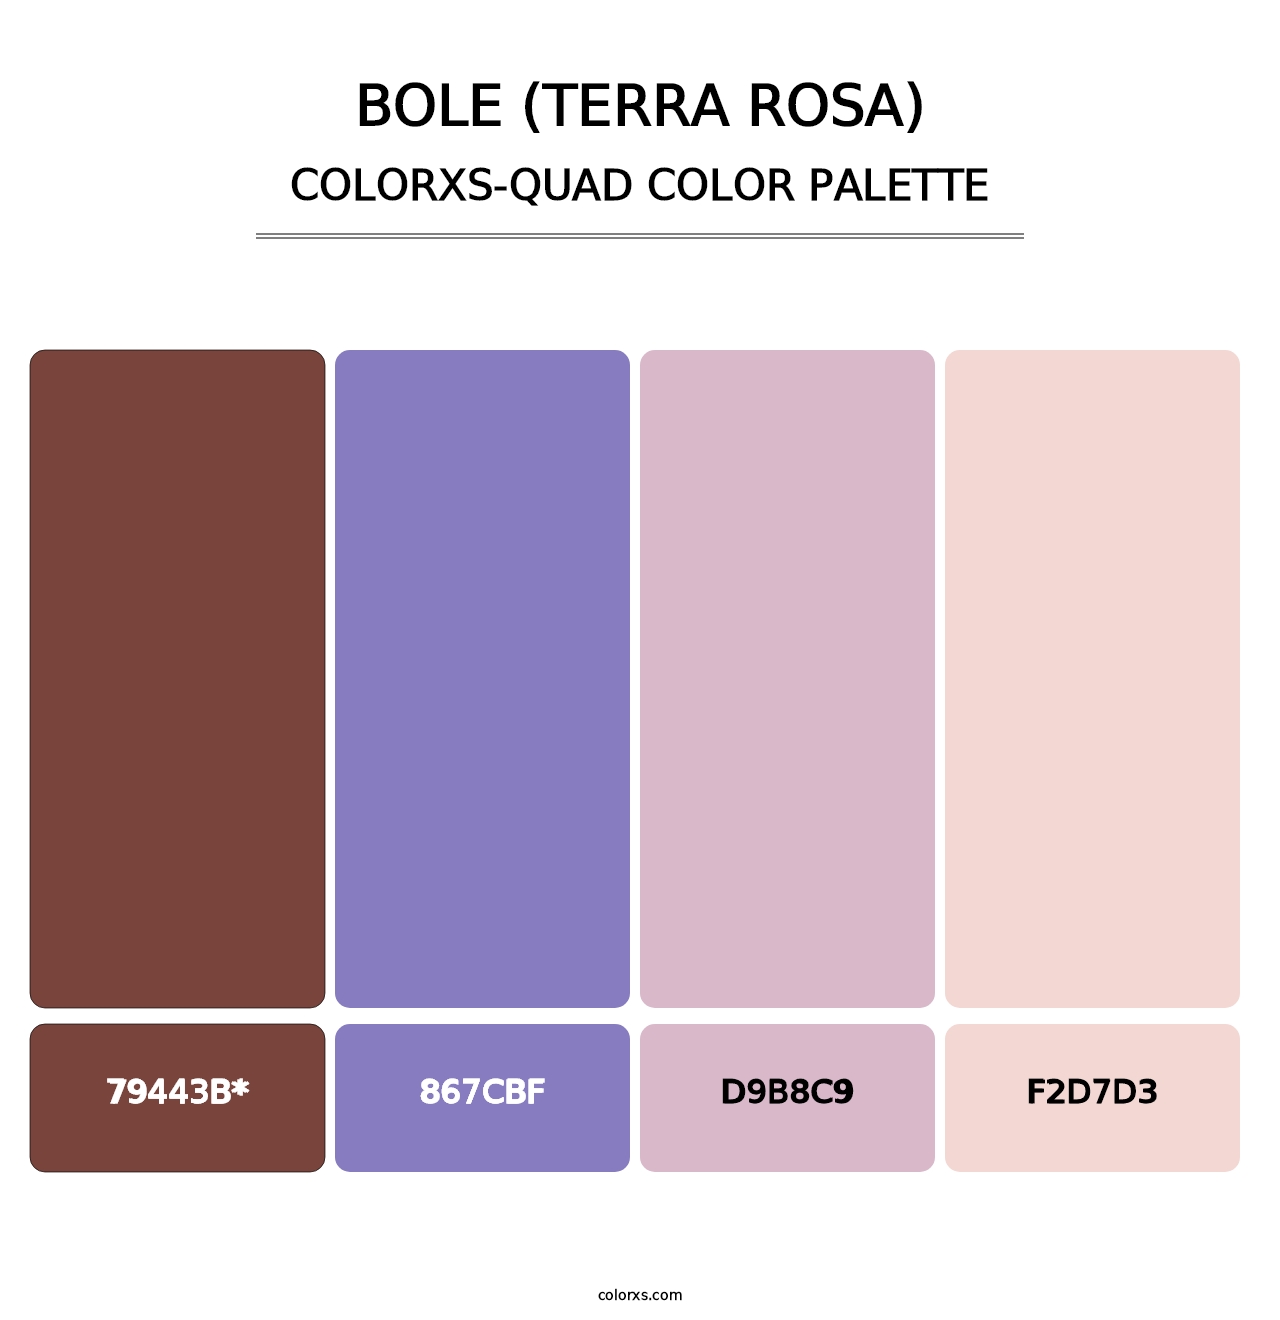 Bole (Terra Rosa) - Colorxs Quad Palette